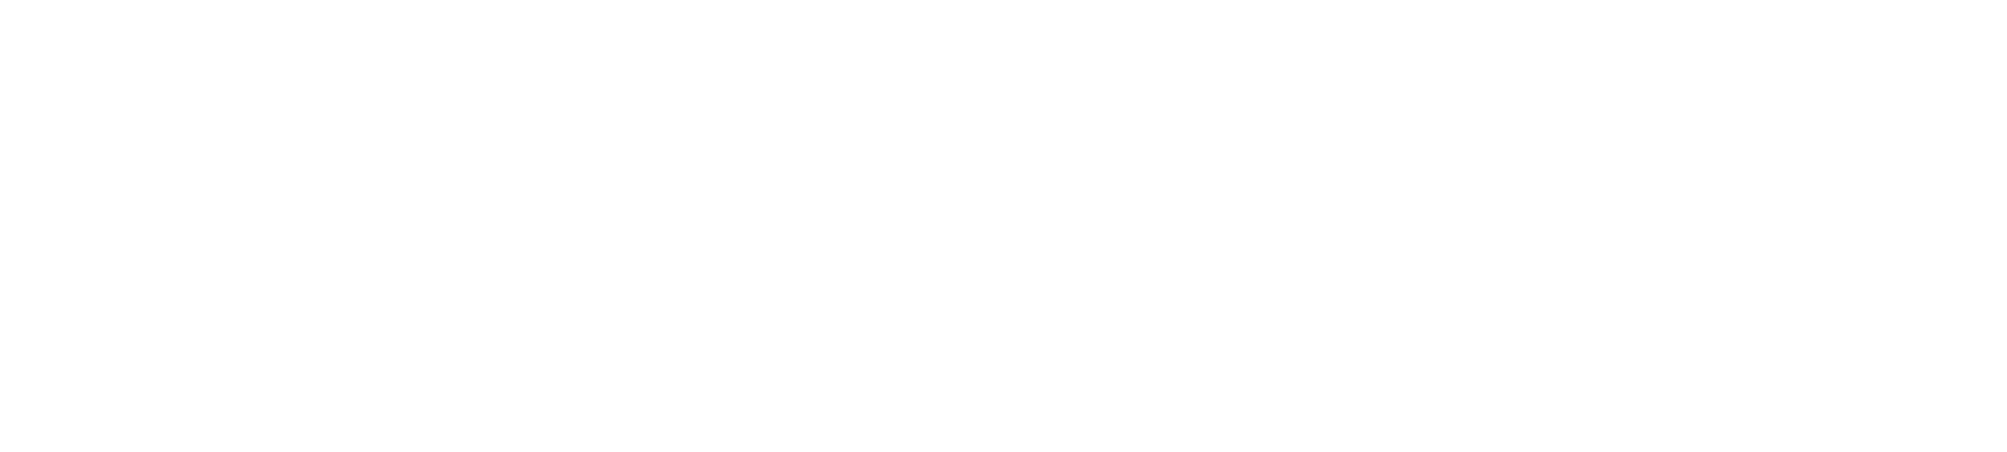 Packstack Logo